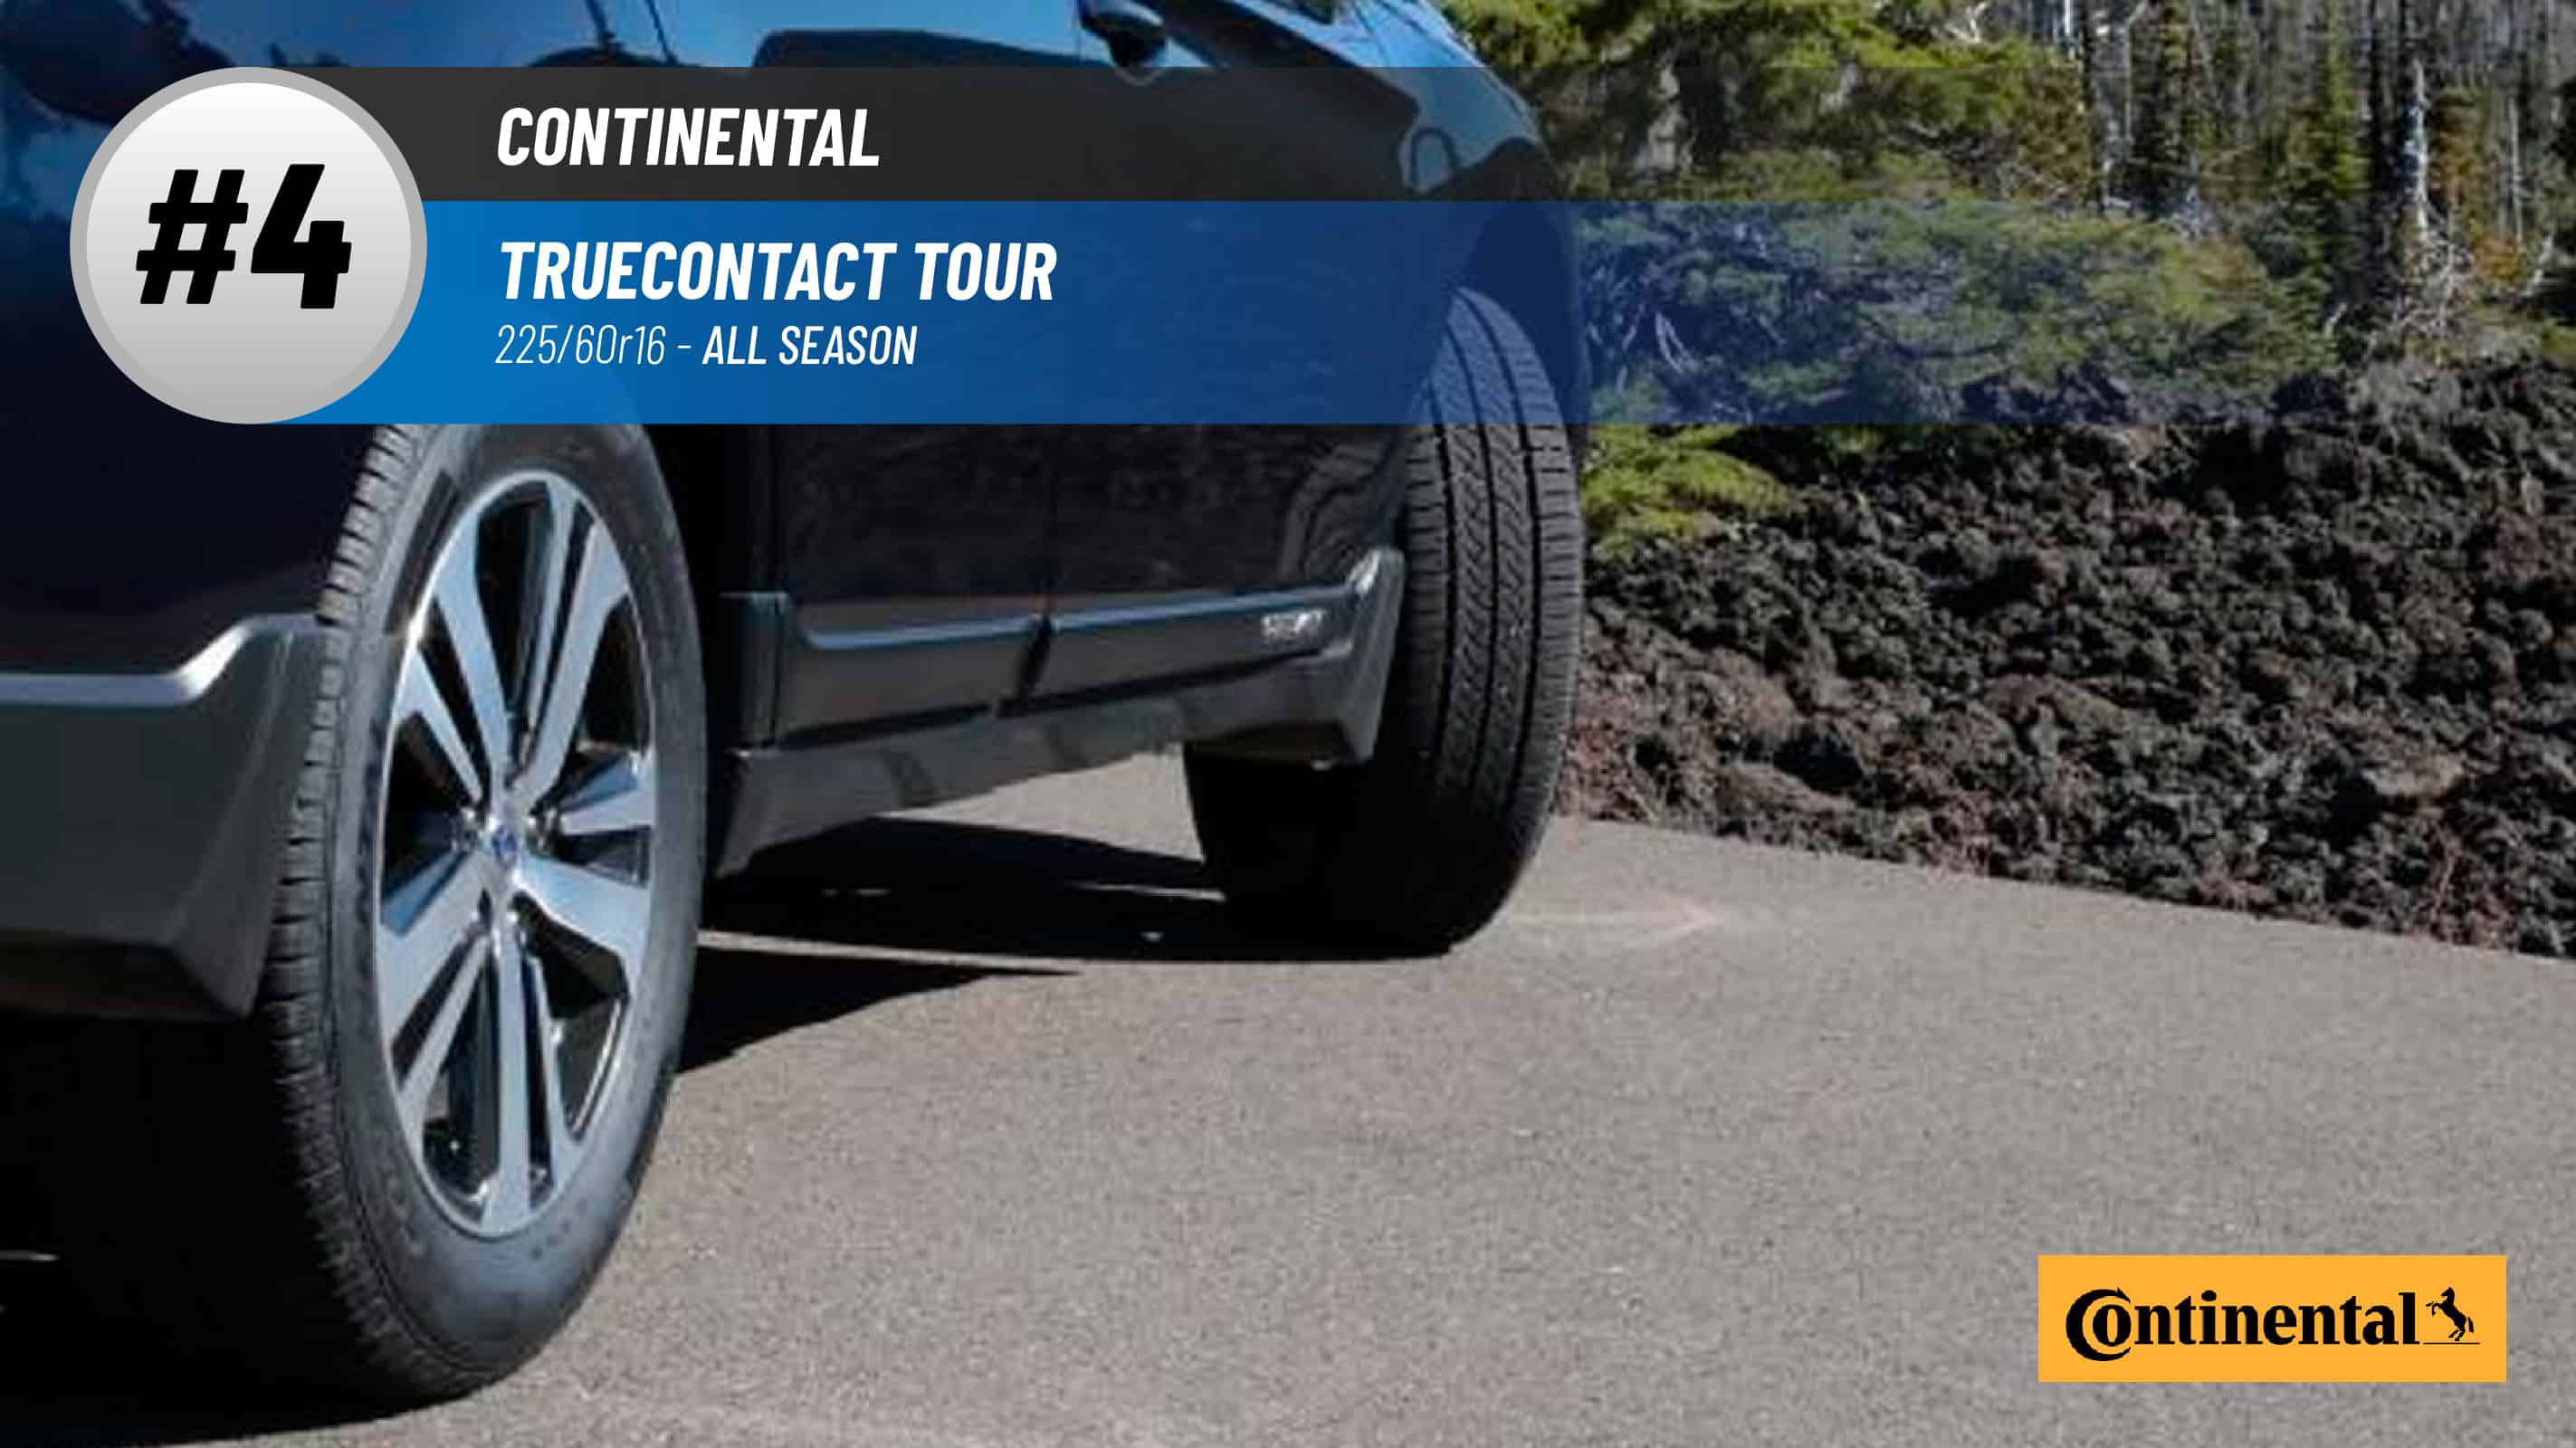 Top #4 All Season Tires: Continental TrueContact Tour – best 225/60r16 